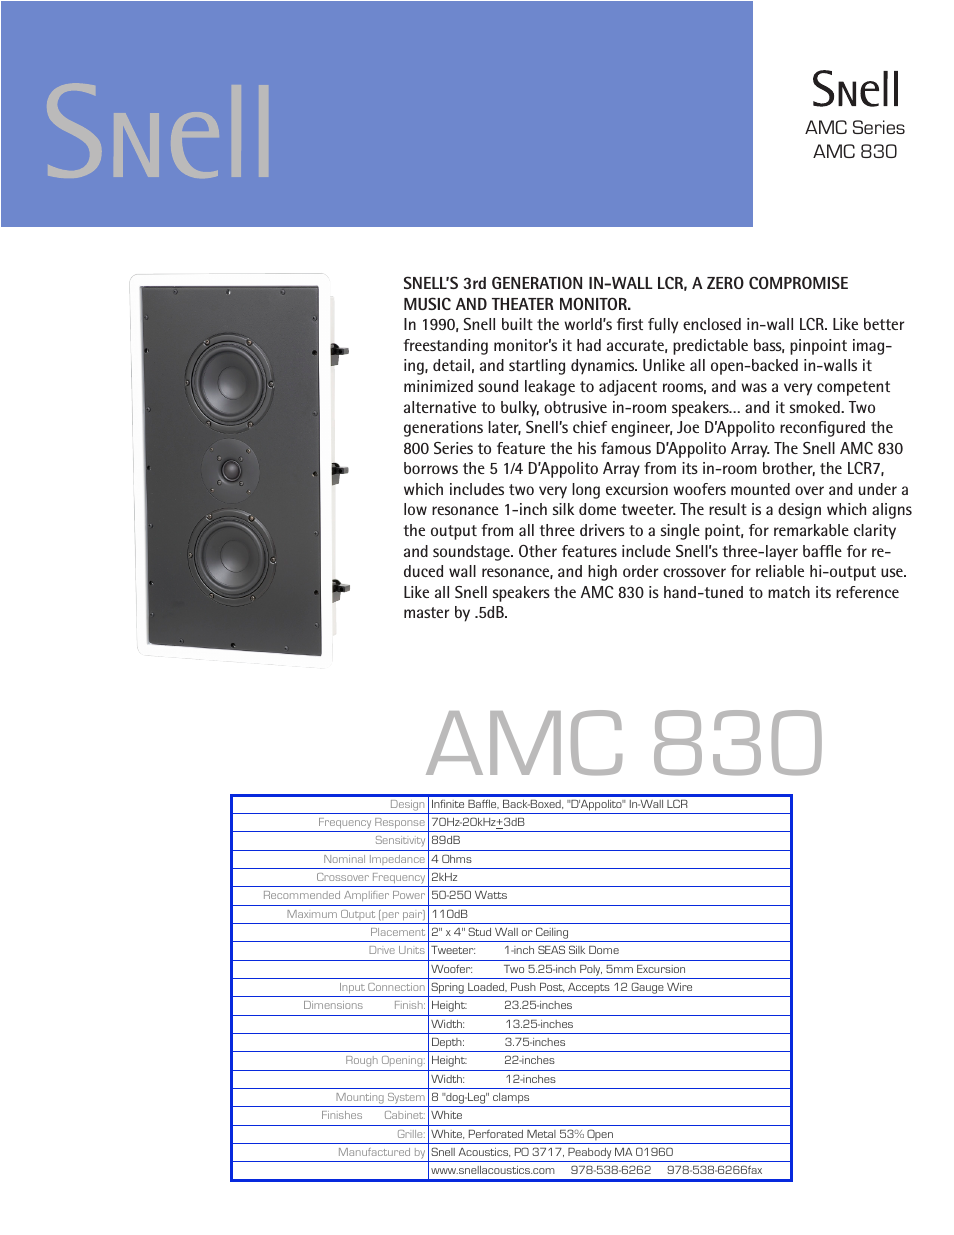 AMC 830